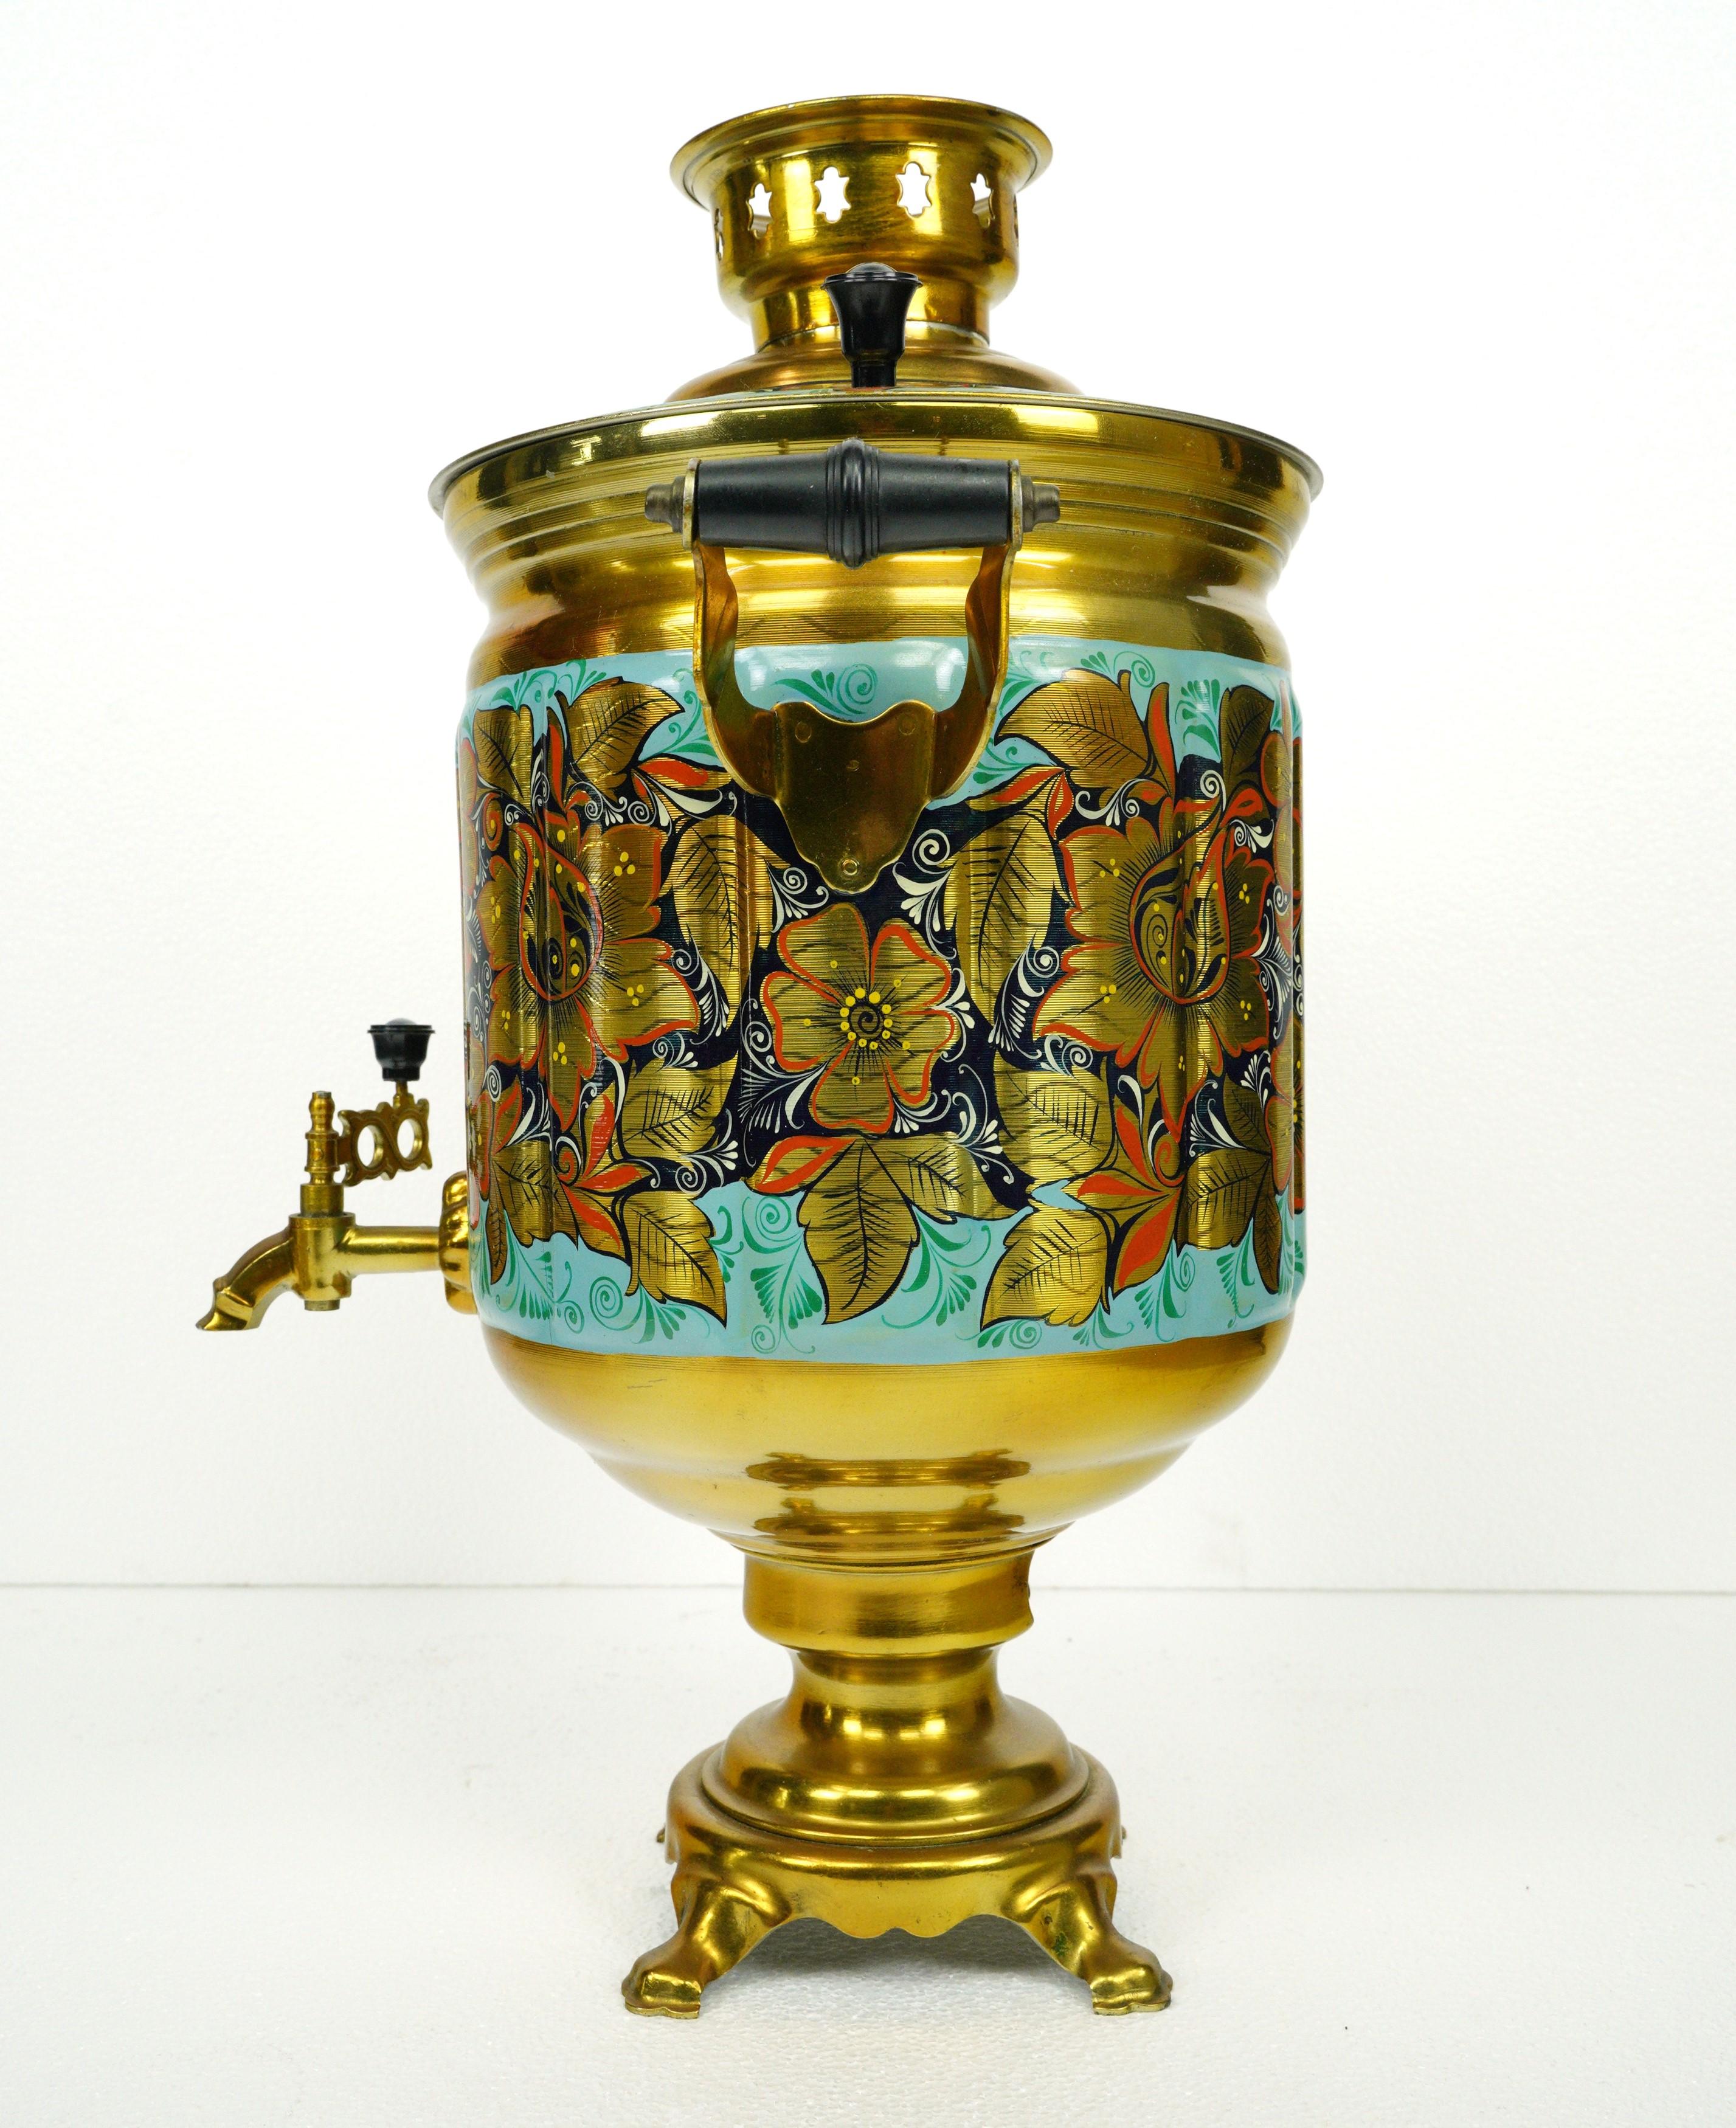 Soviet Russian Floral Brass Electric Samovar Teapot Antique For Sale 2